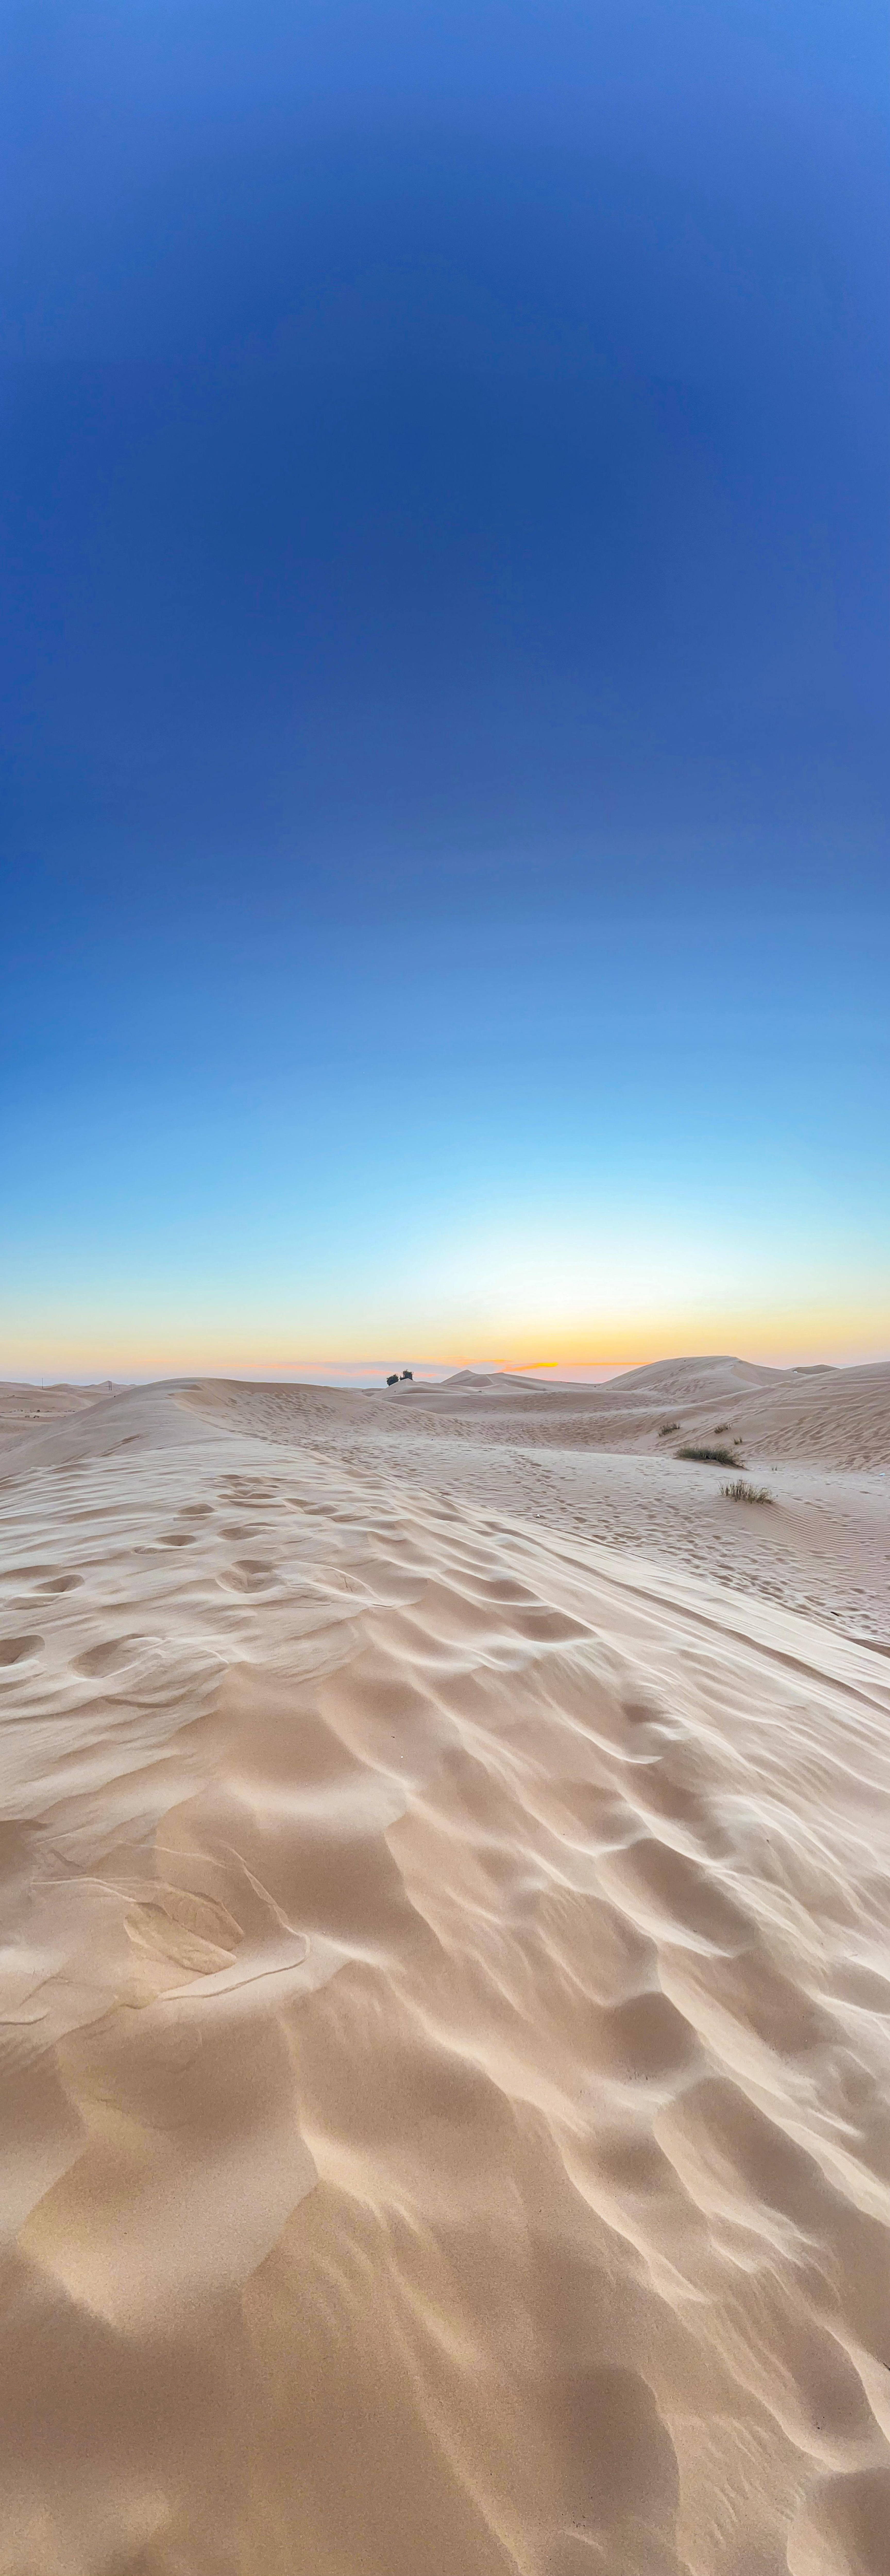 ITAP of the Dubai desert in Panorama mode